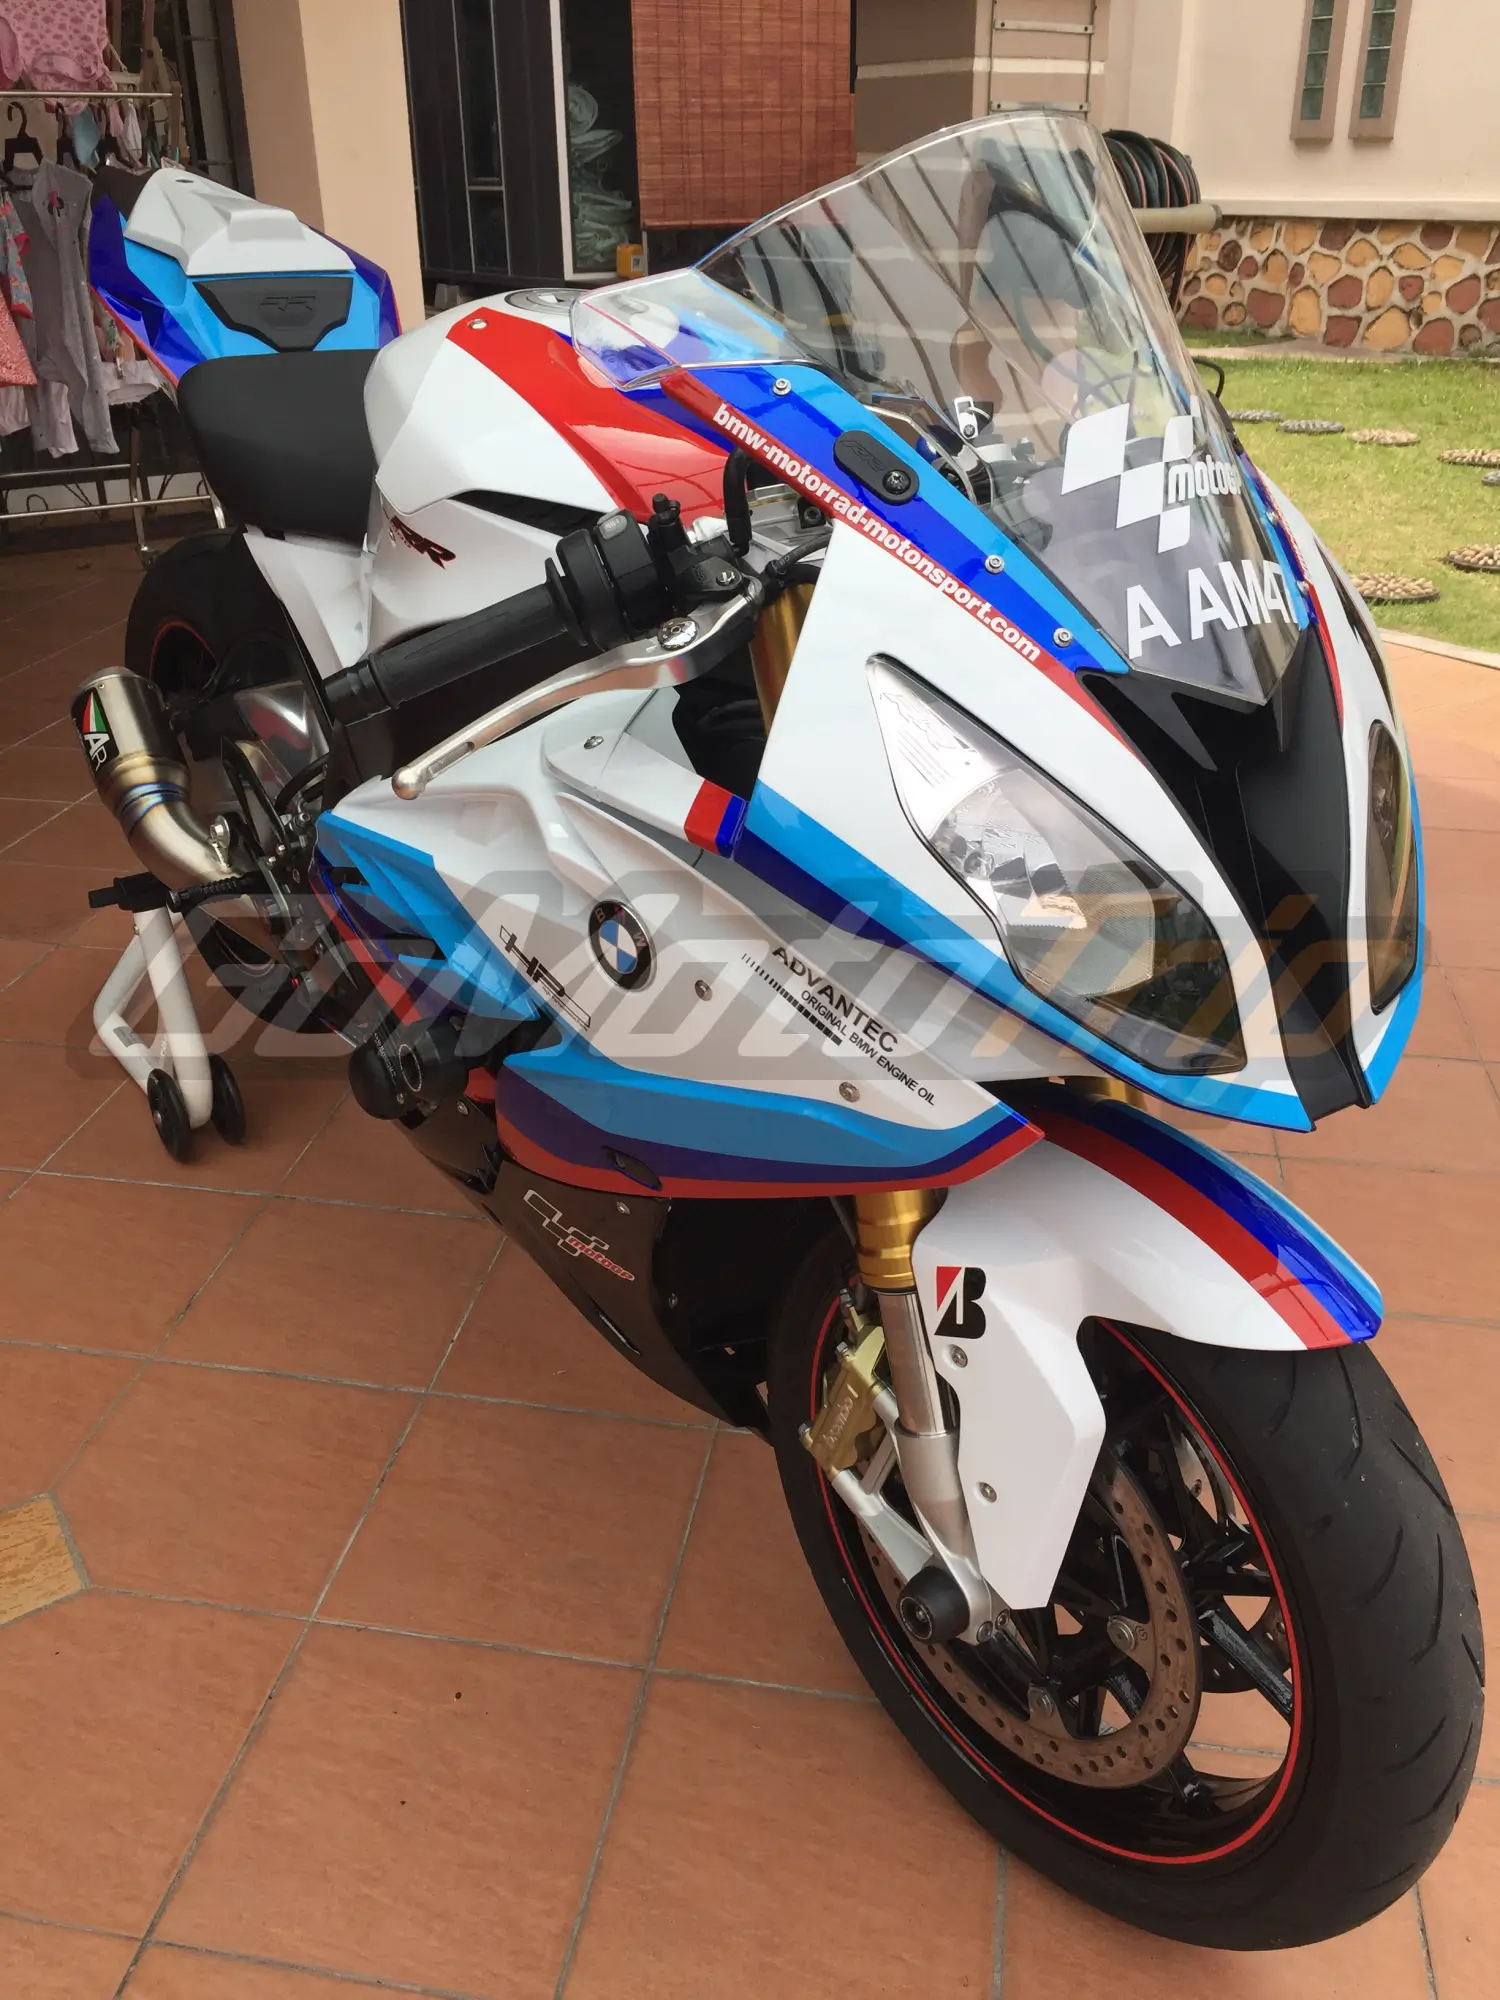 Rider-Review-Ahmad-BMW-S1000RR-MotoGP-Safety-Bike-Fairing-5